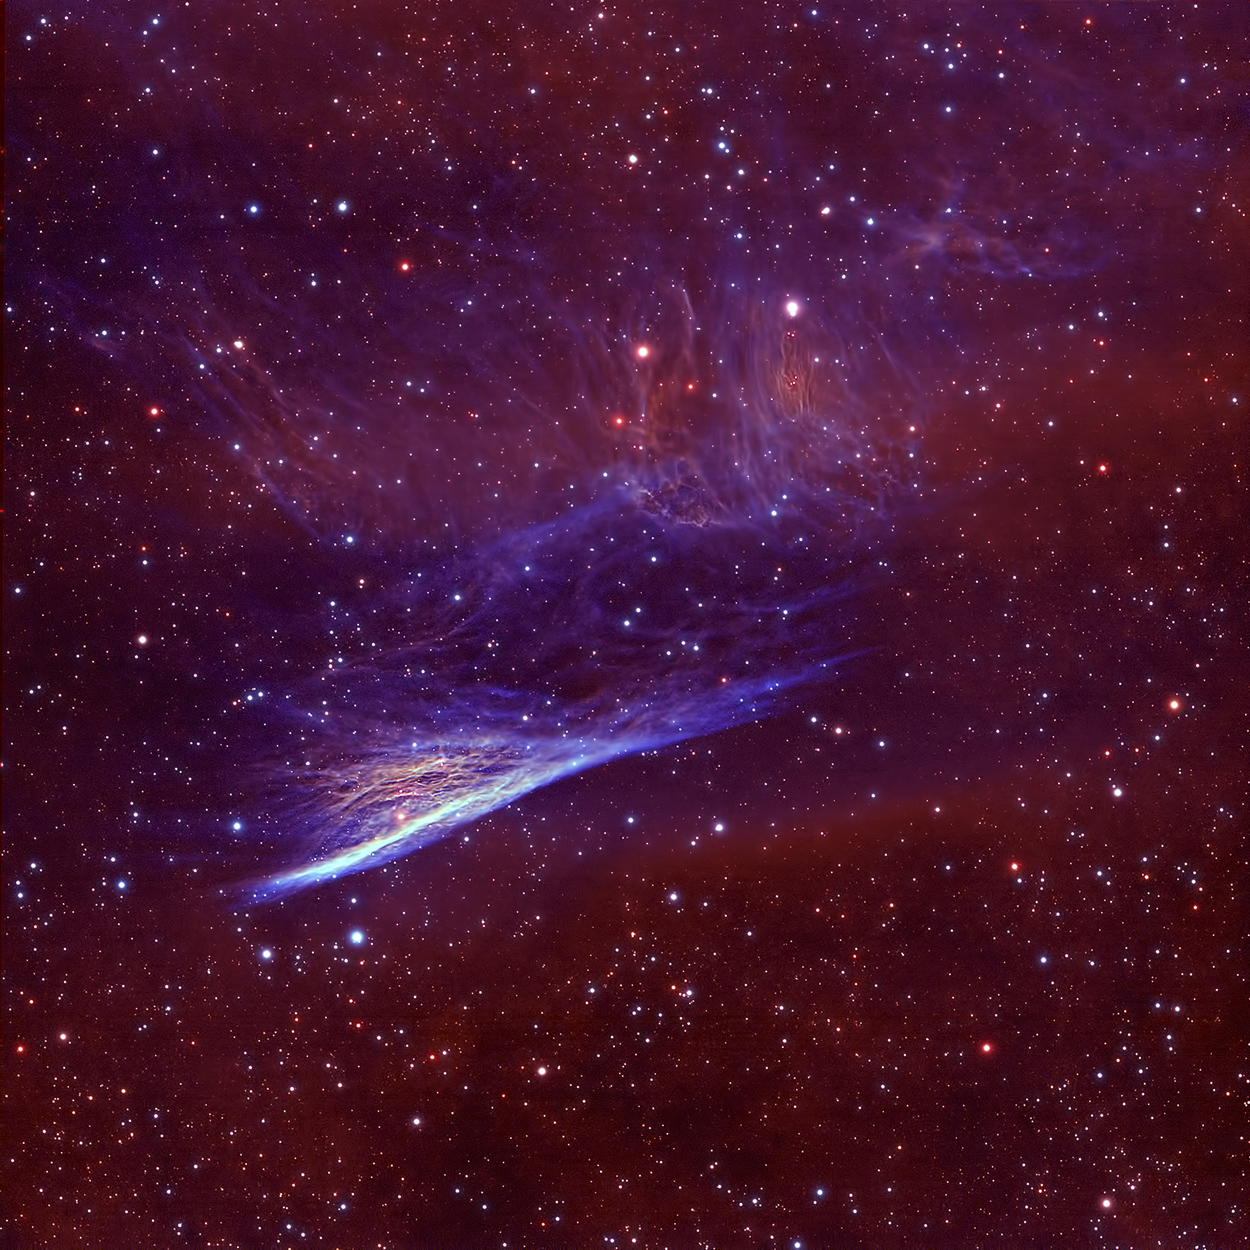 NGC2736NBbicolor_1250_Jurasevich.jpg